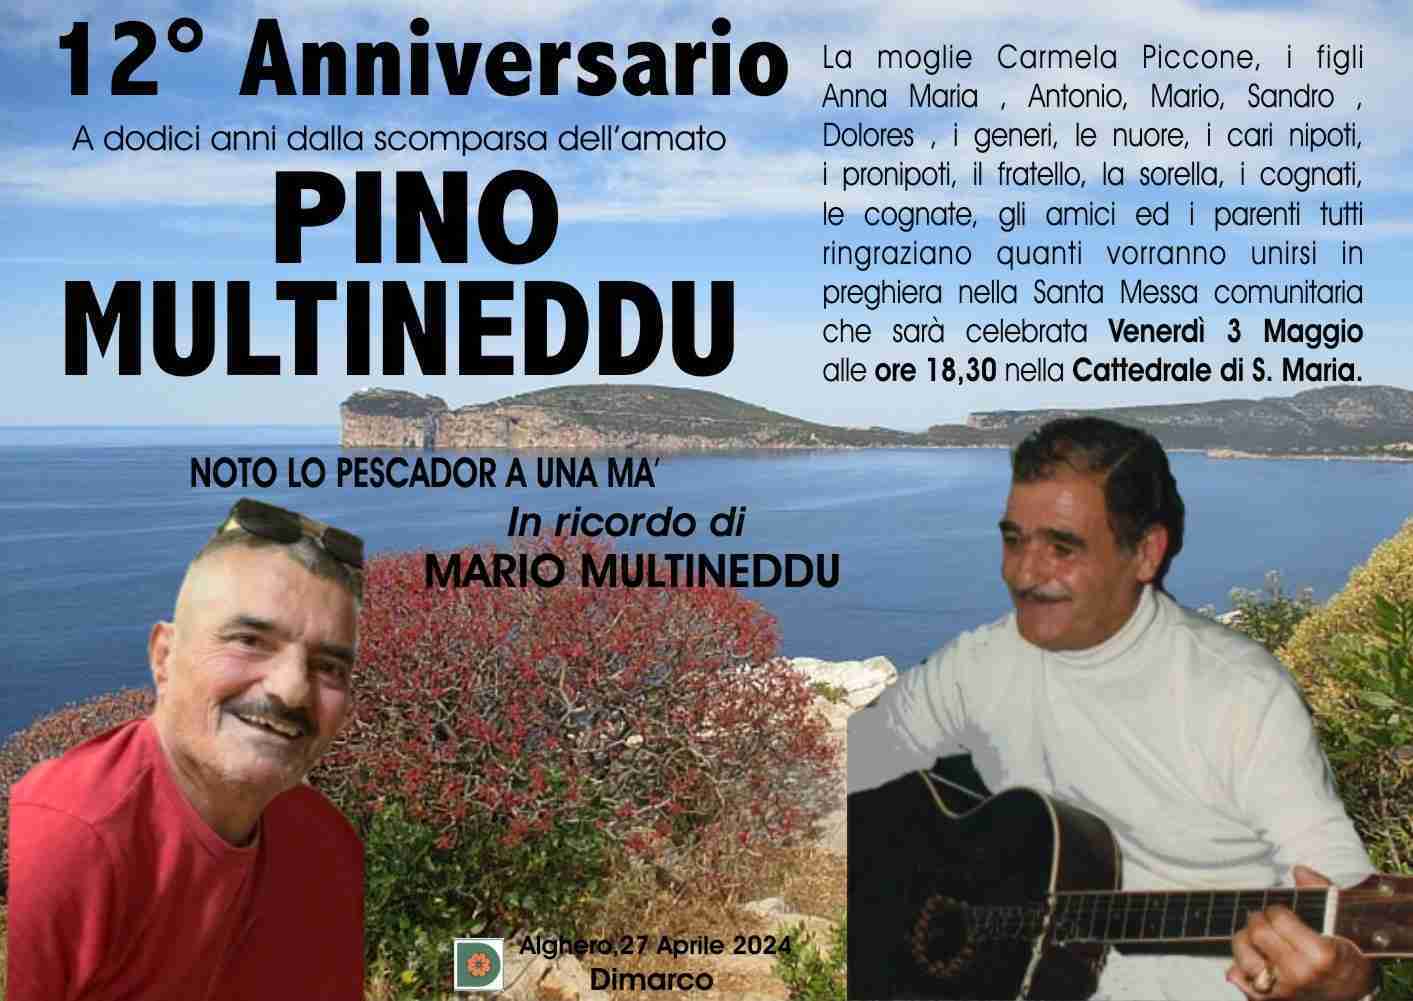 Pino Multineddu e in ricordo di Mario Multineddu